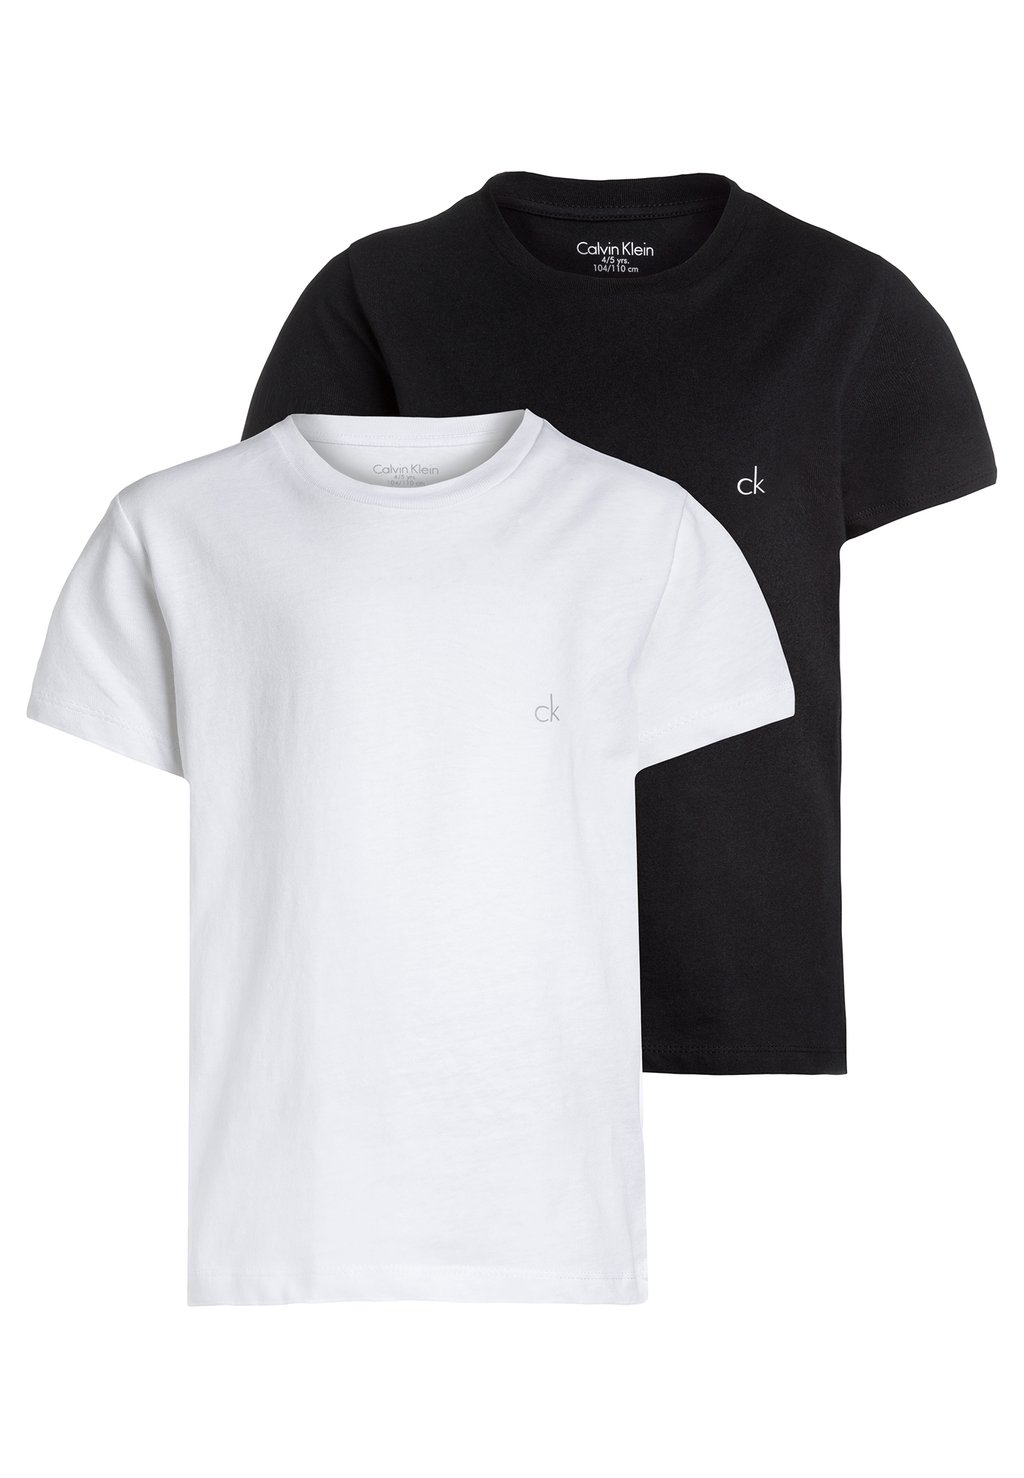 НАБОР 2 – базовая футболка Calvin Klein Underwear, черный/белый